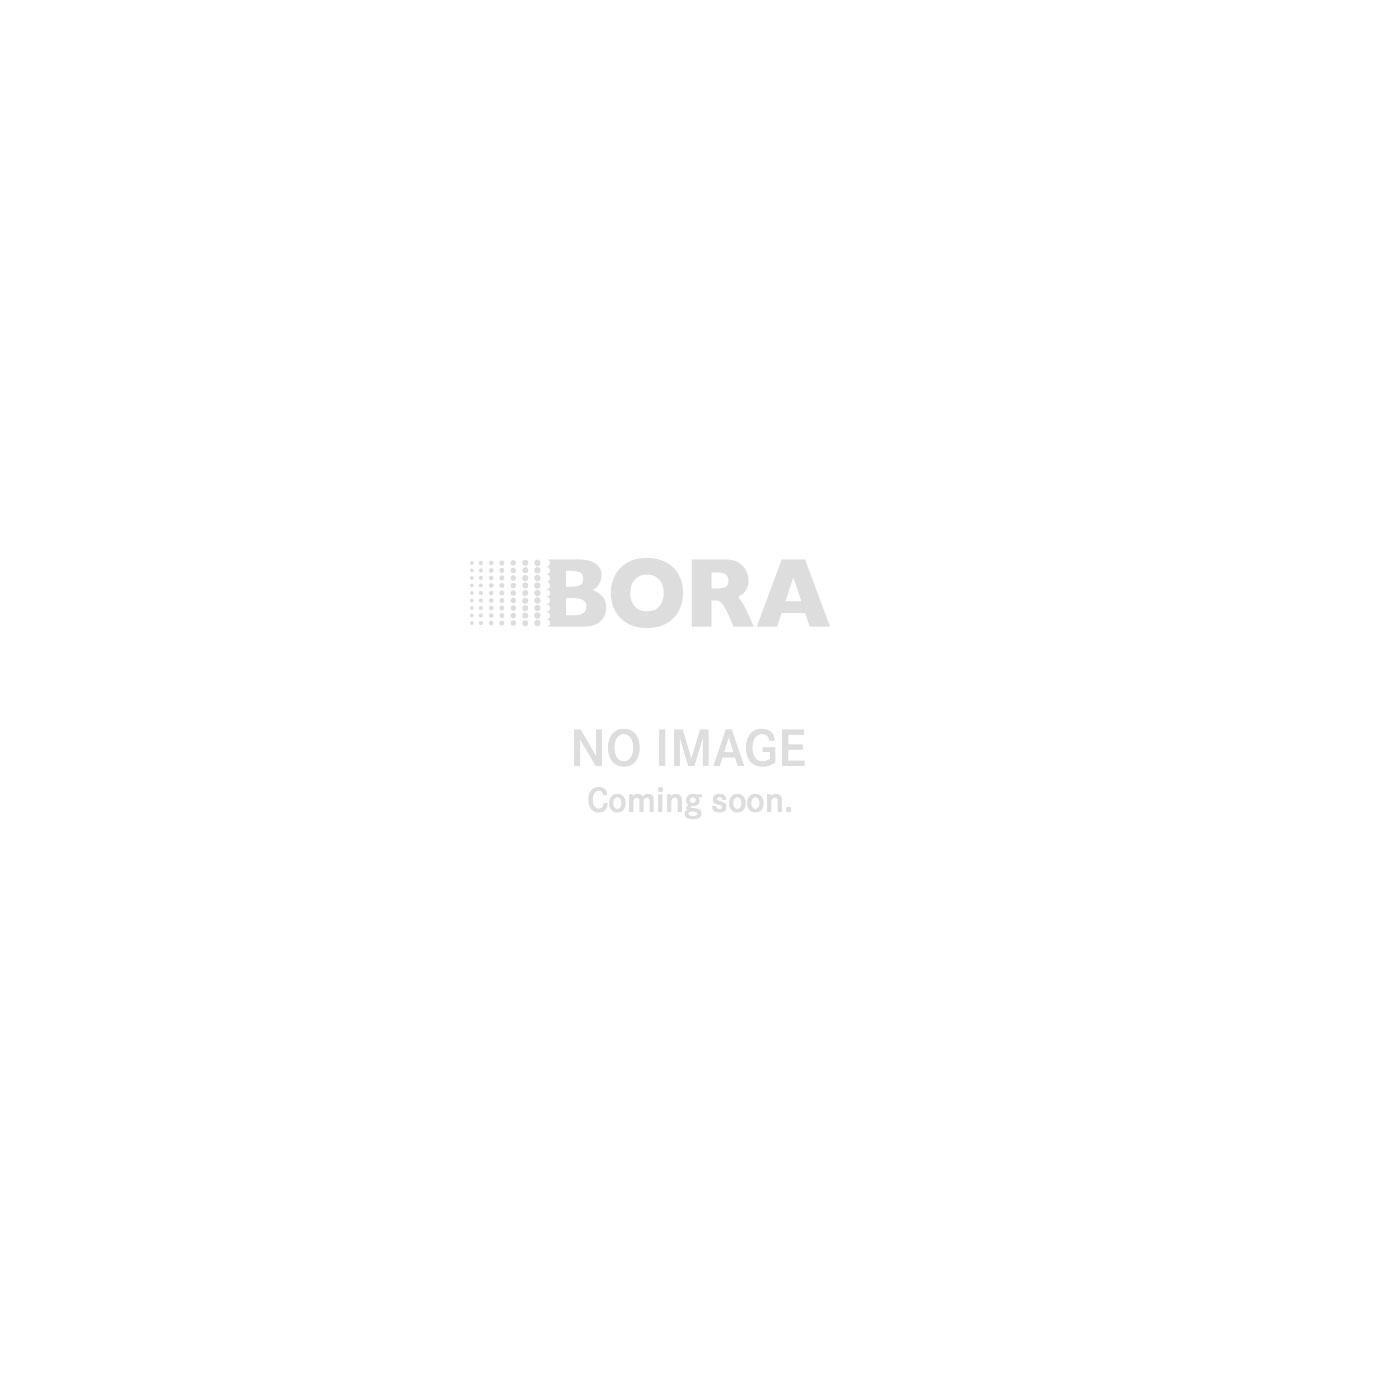 New BORA Professional receives the Good Design Award